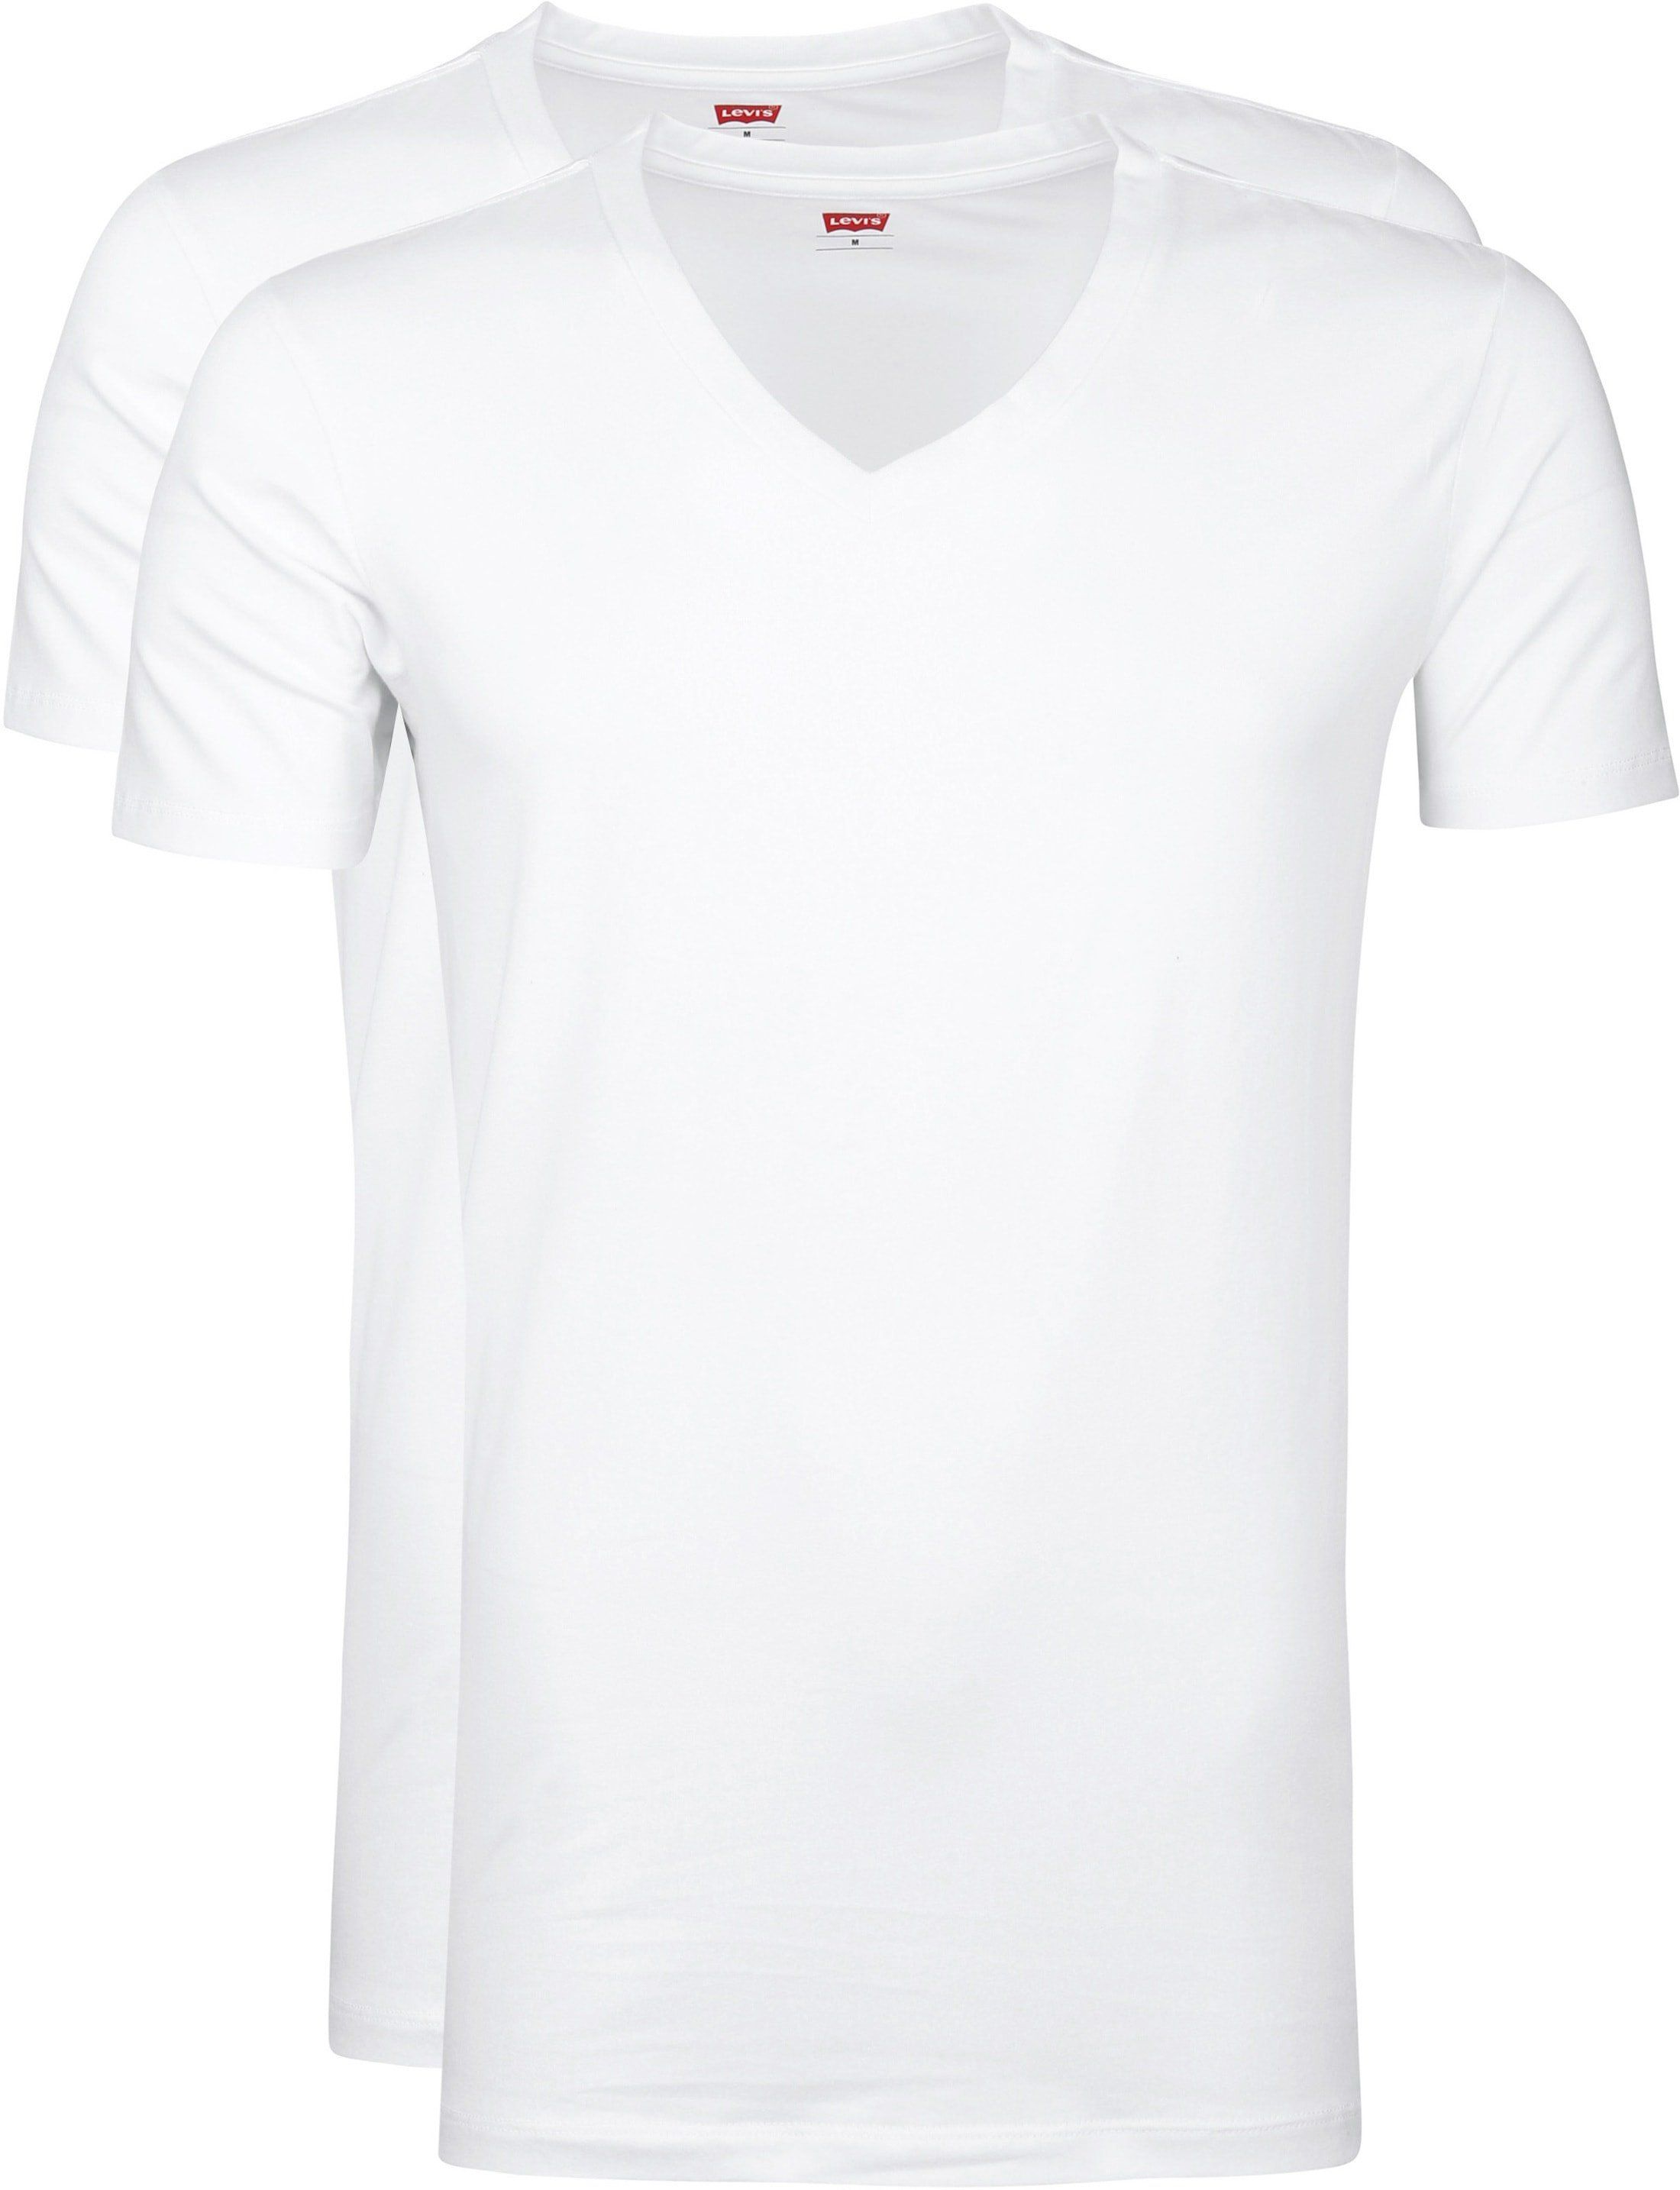 Levi's T-Shirt V-Neck 2Pack White size L